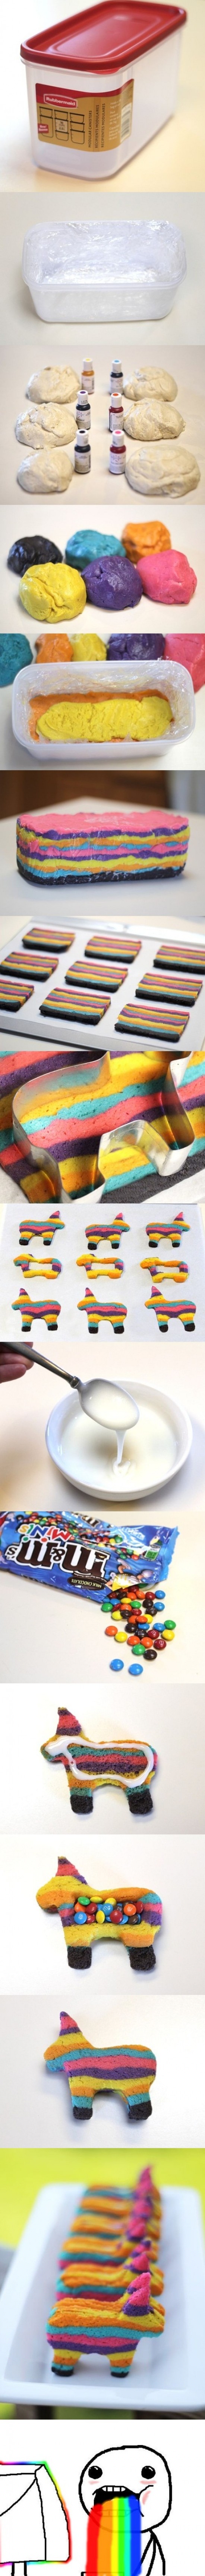 Puke_rainbows - Burritos puke rainbows